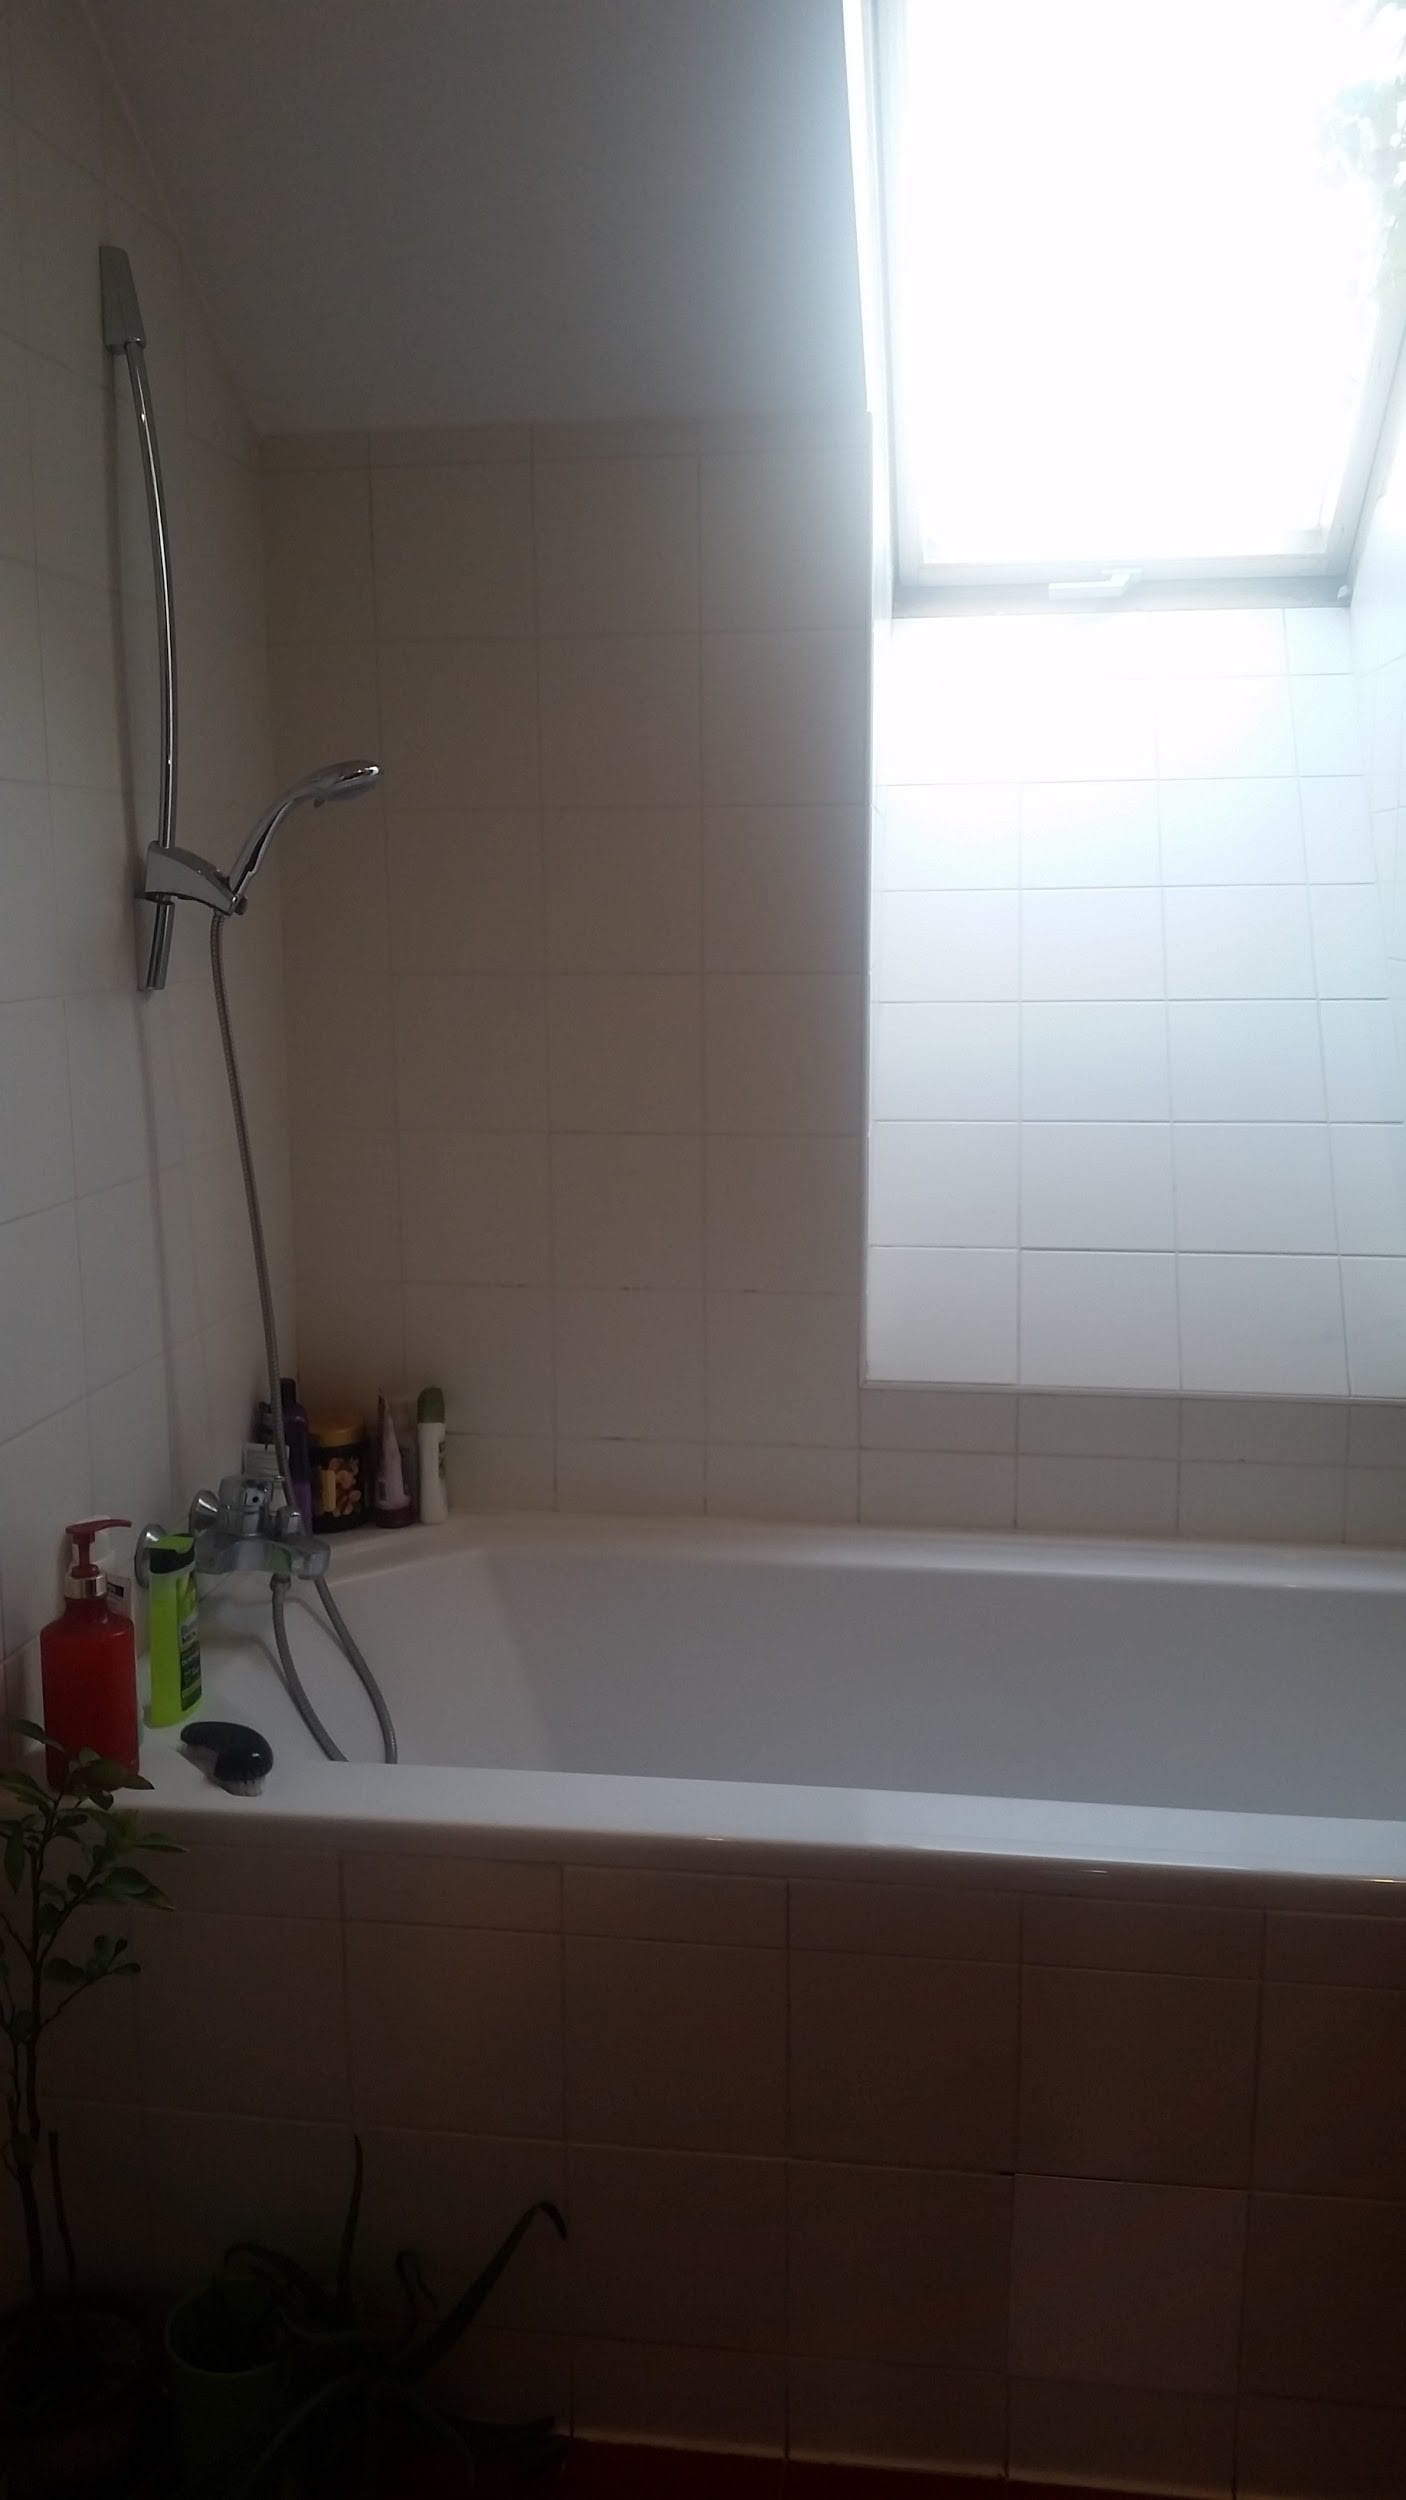 Bathtub with shower head in Czech Republic